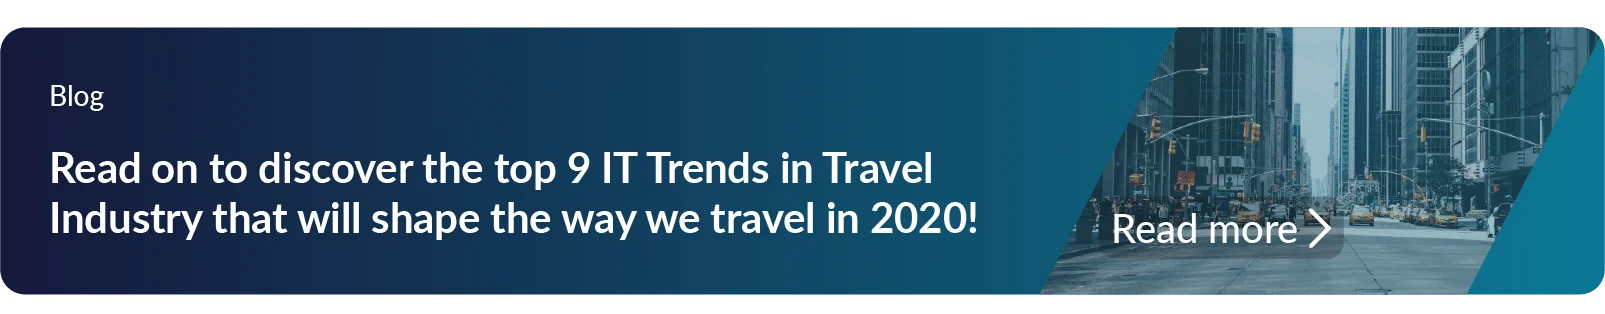 Top 9 IT Trends in Travel Industry 2020